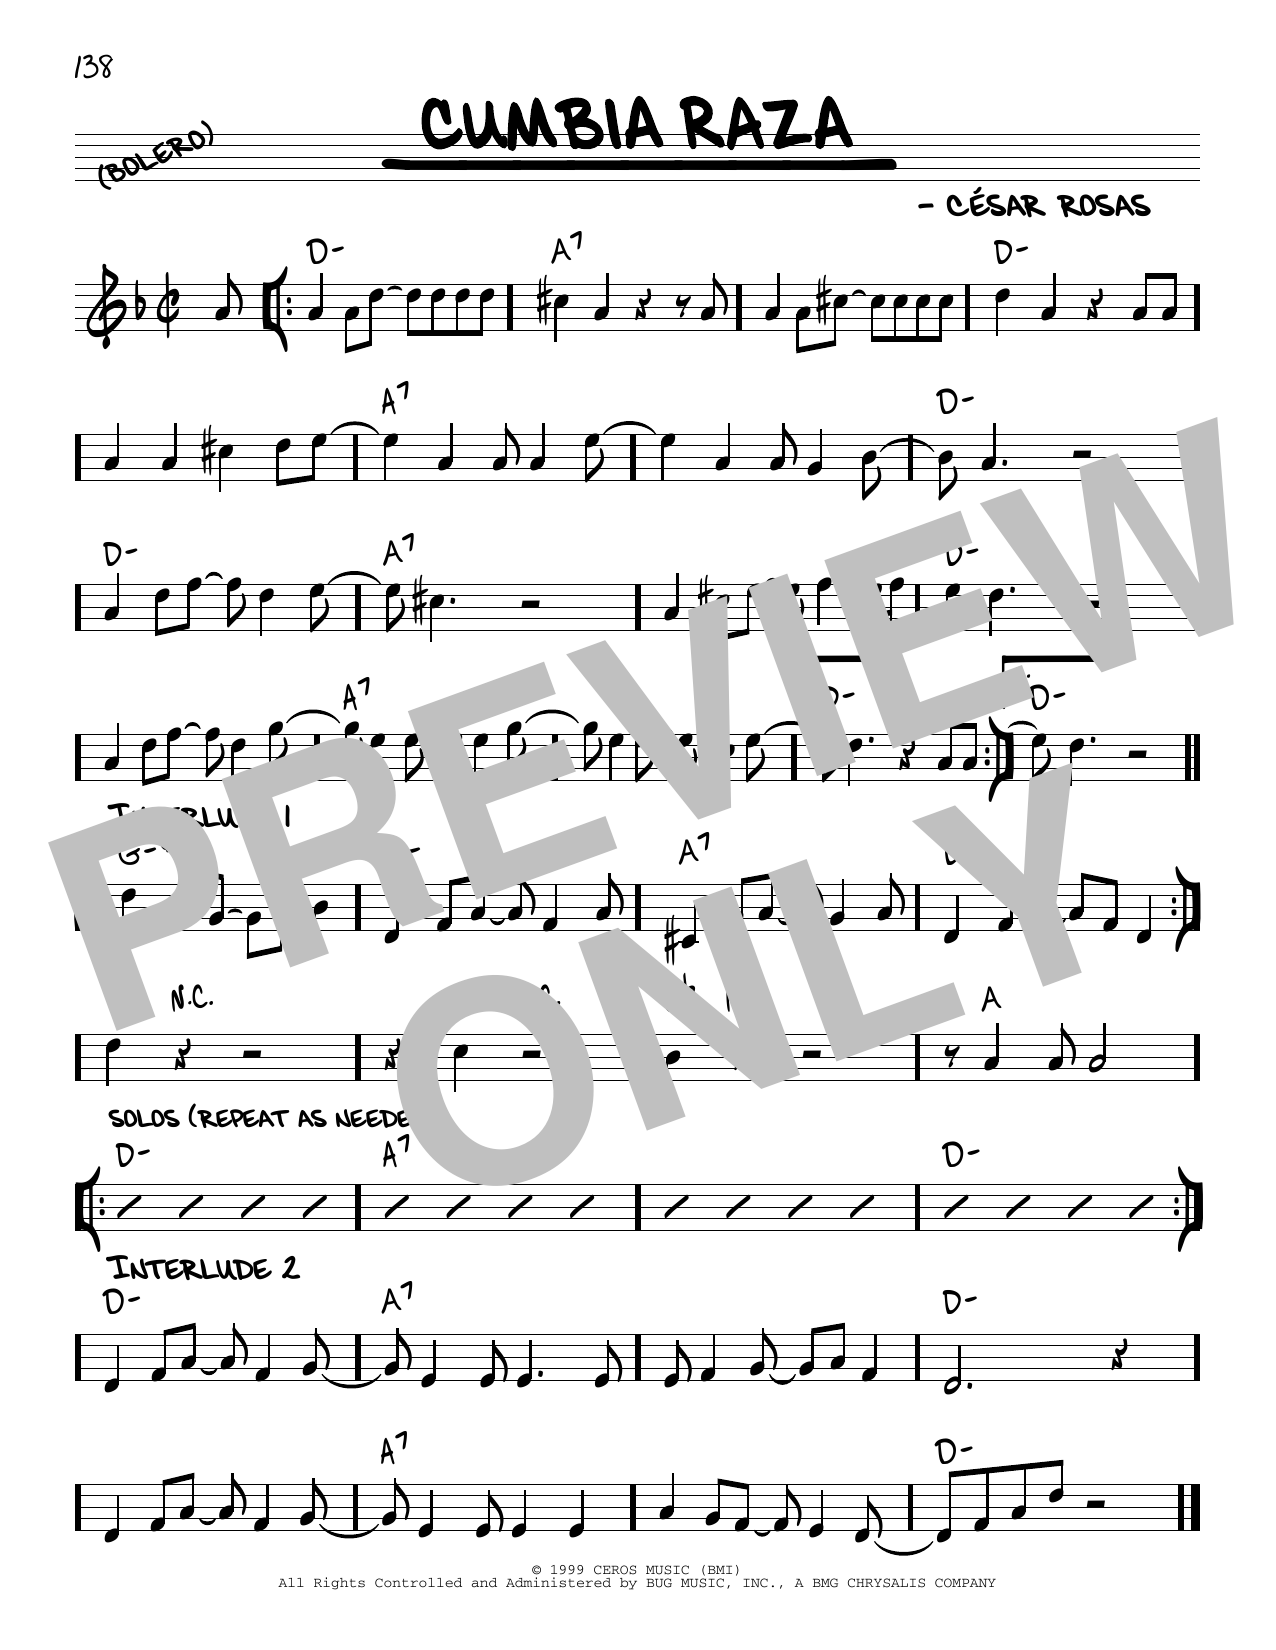 Los Lobos Cumbia Raza Sheet Music Notes & Chords for Real Book – Melody & Chords - Download or Print PDF